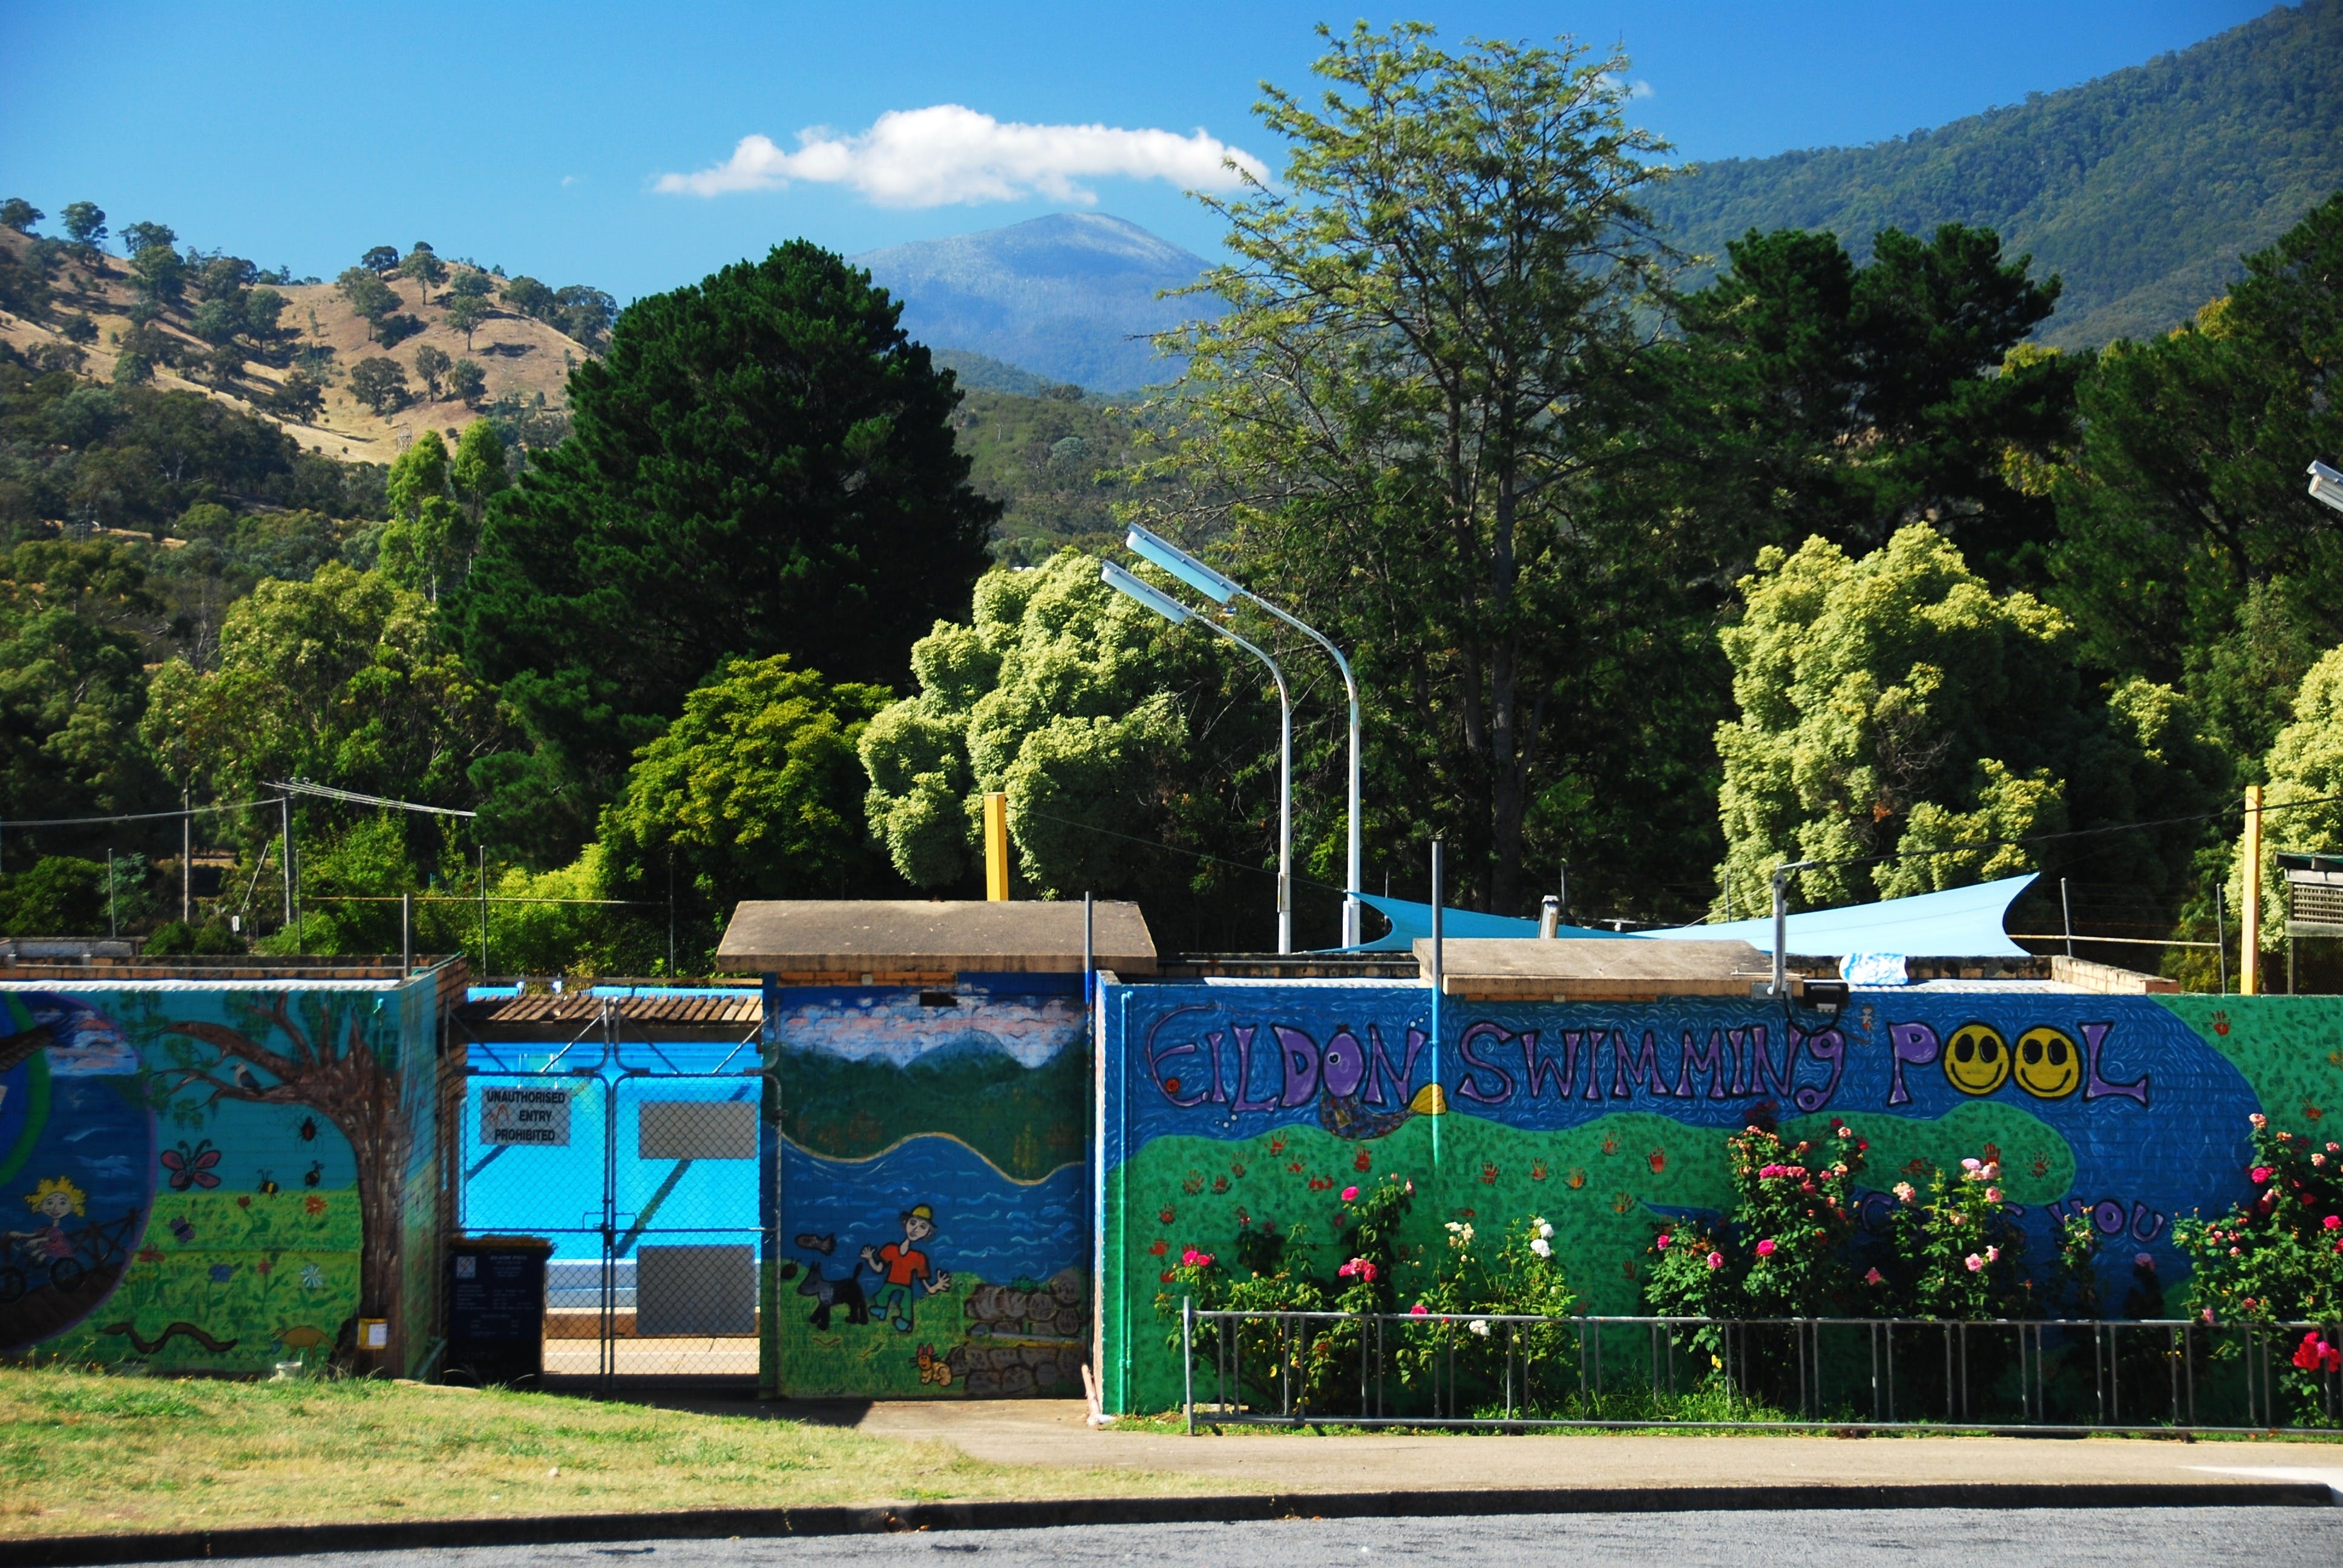 Eildon Outdoor Swimming Pool - Tourism Canberra